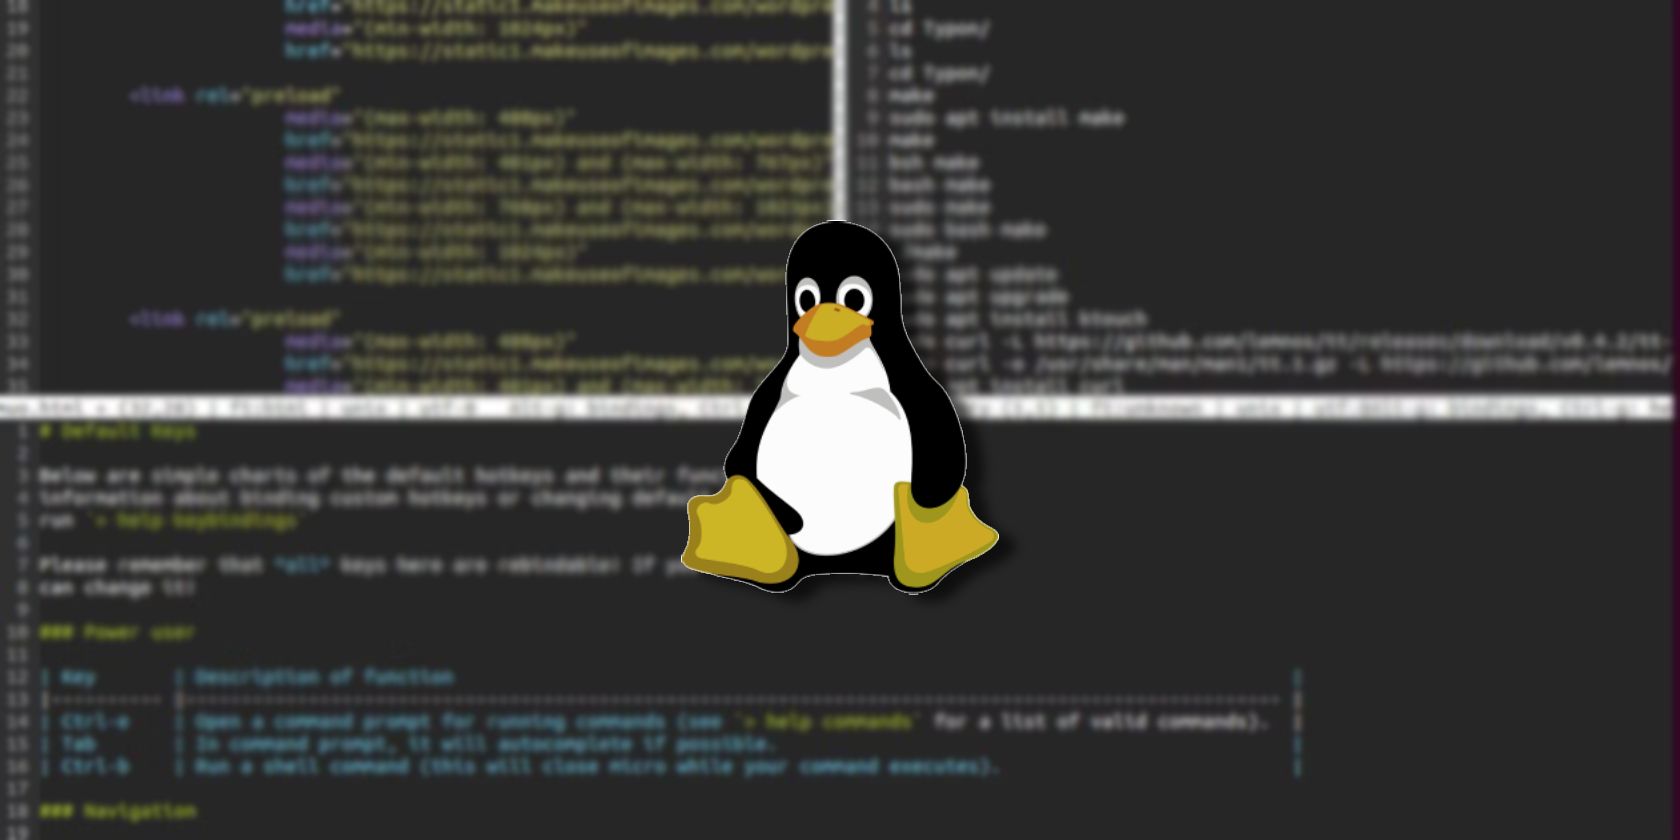 linux tux mascot on a text editor desktop screenshot